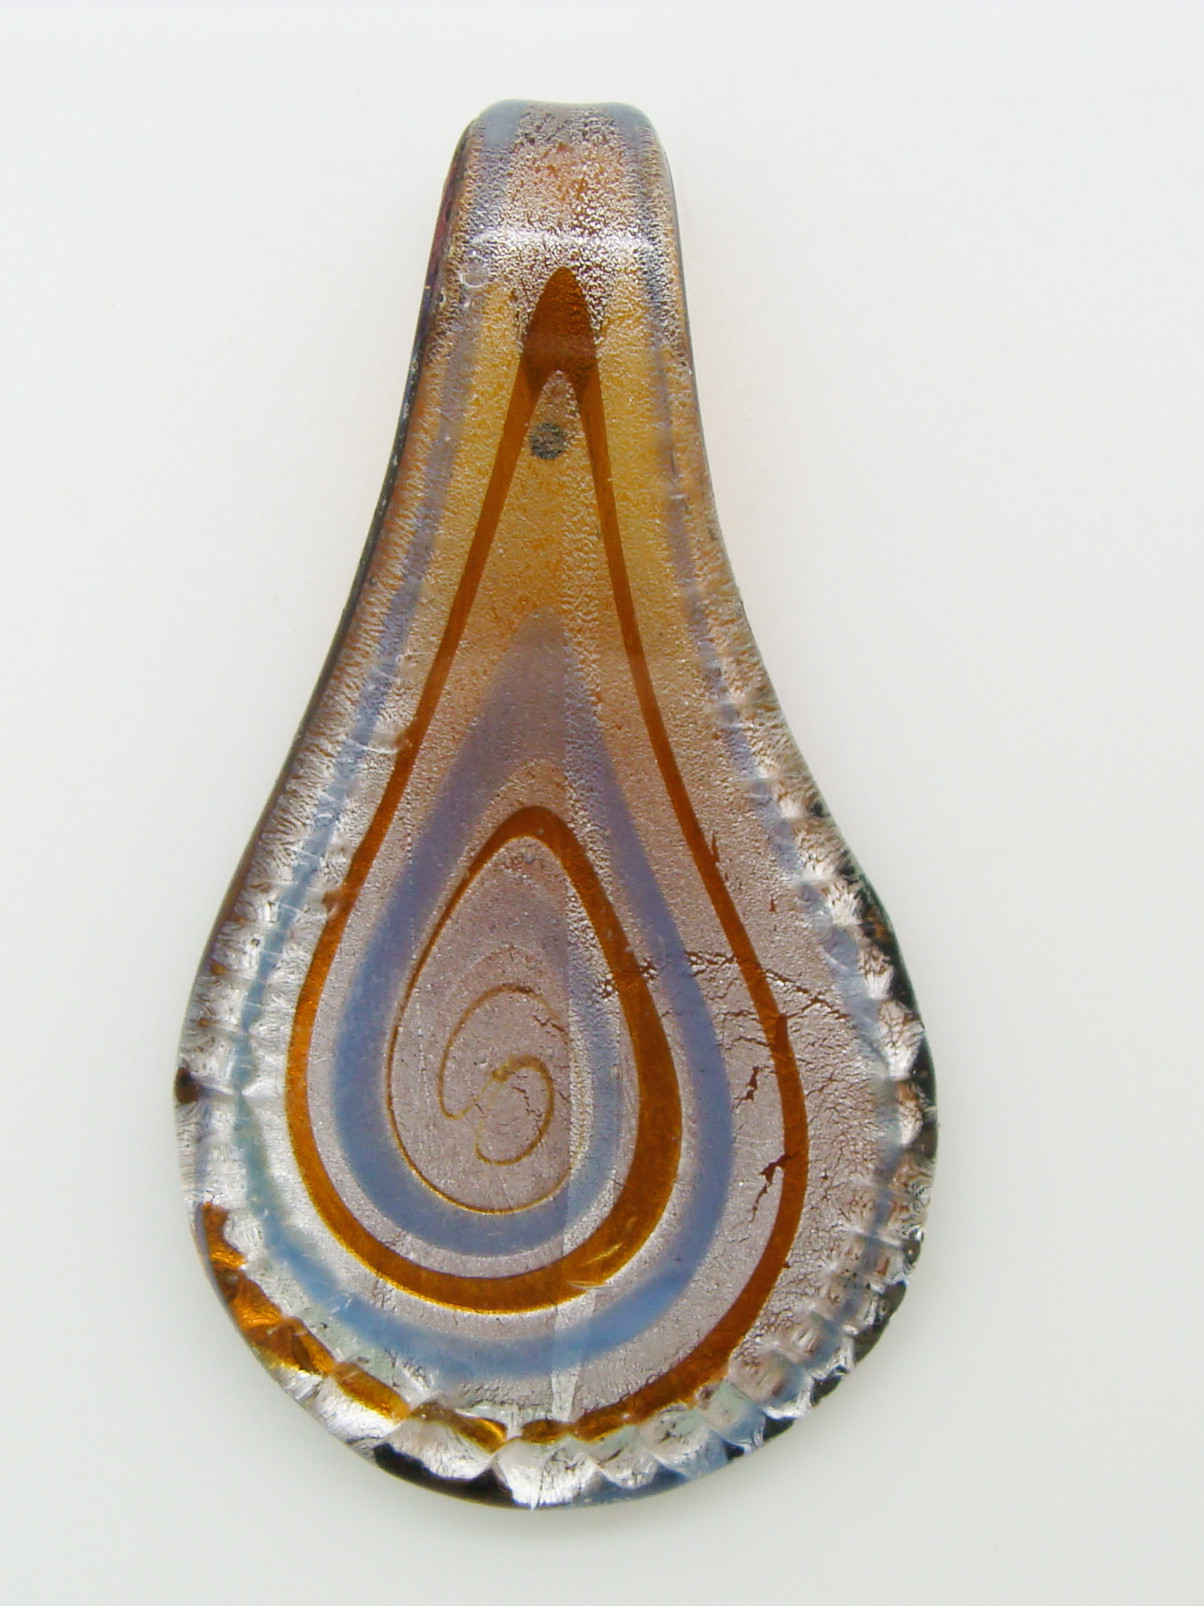 Pend-386-3 pendentif goutte marron spirale verre lampwork